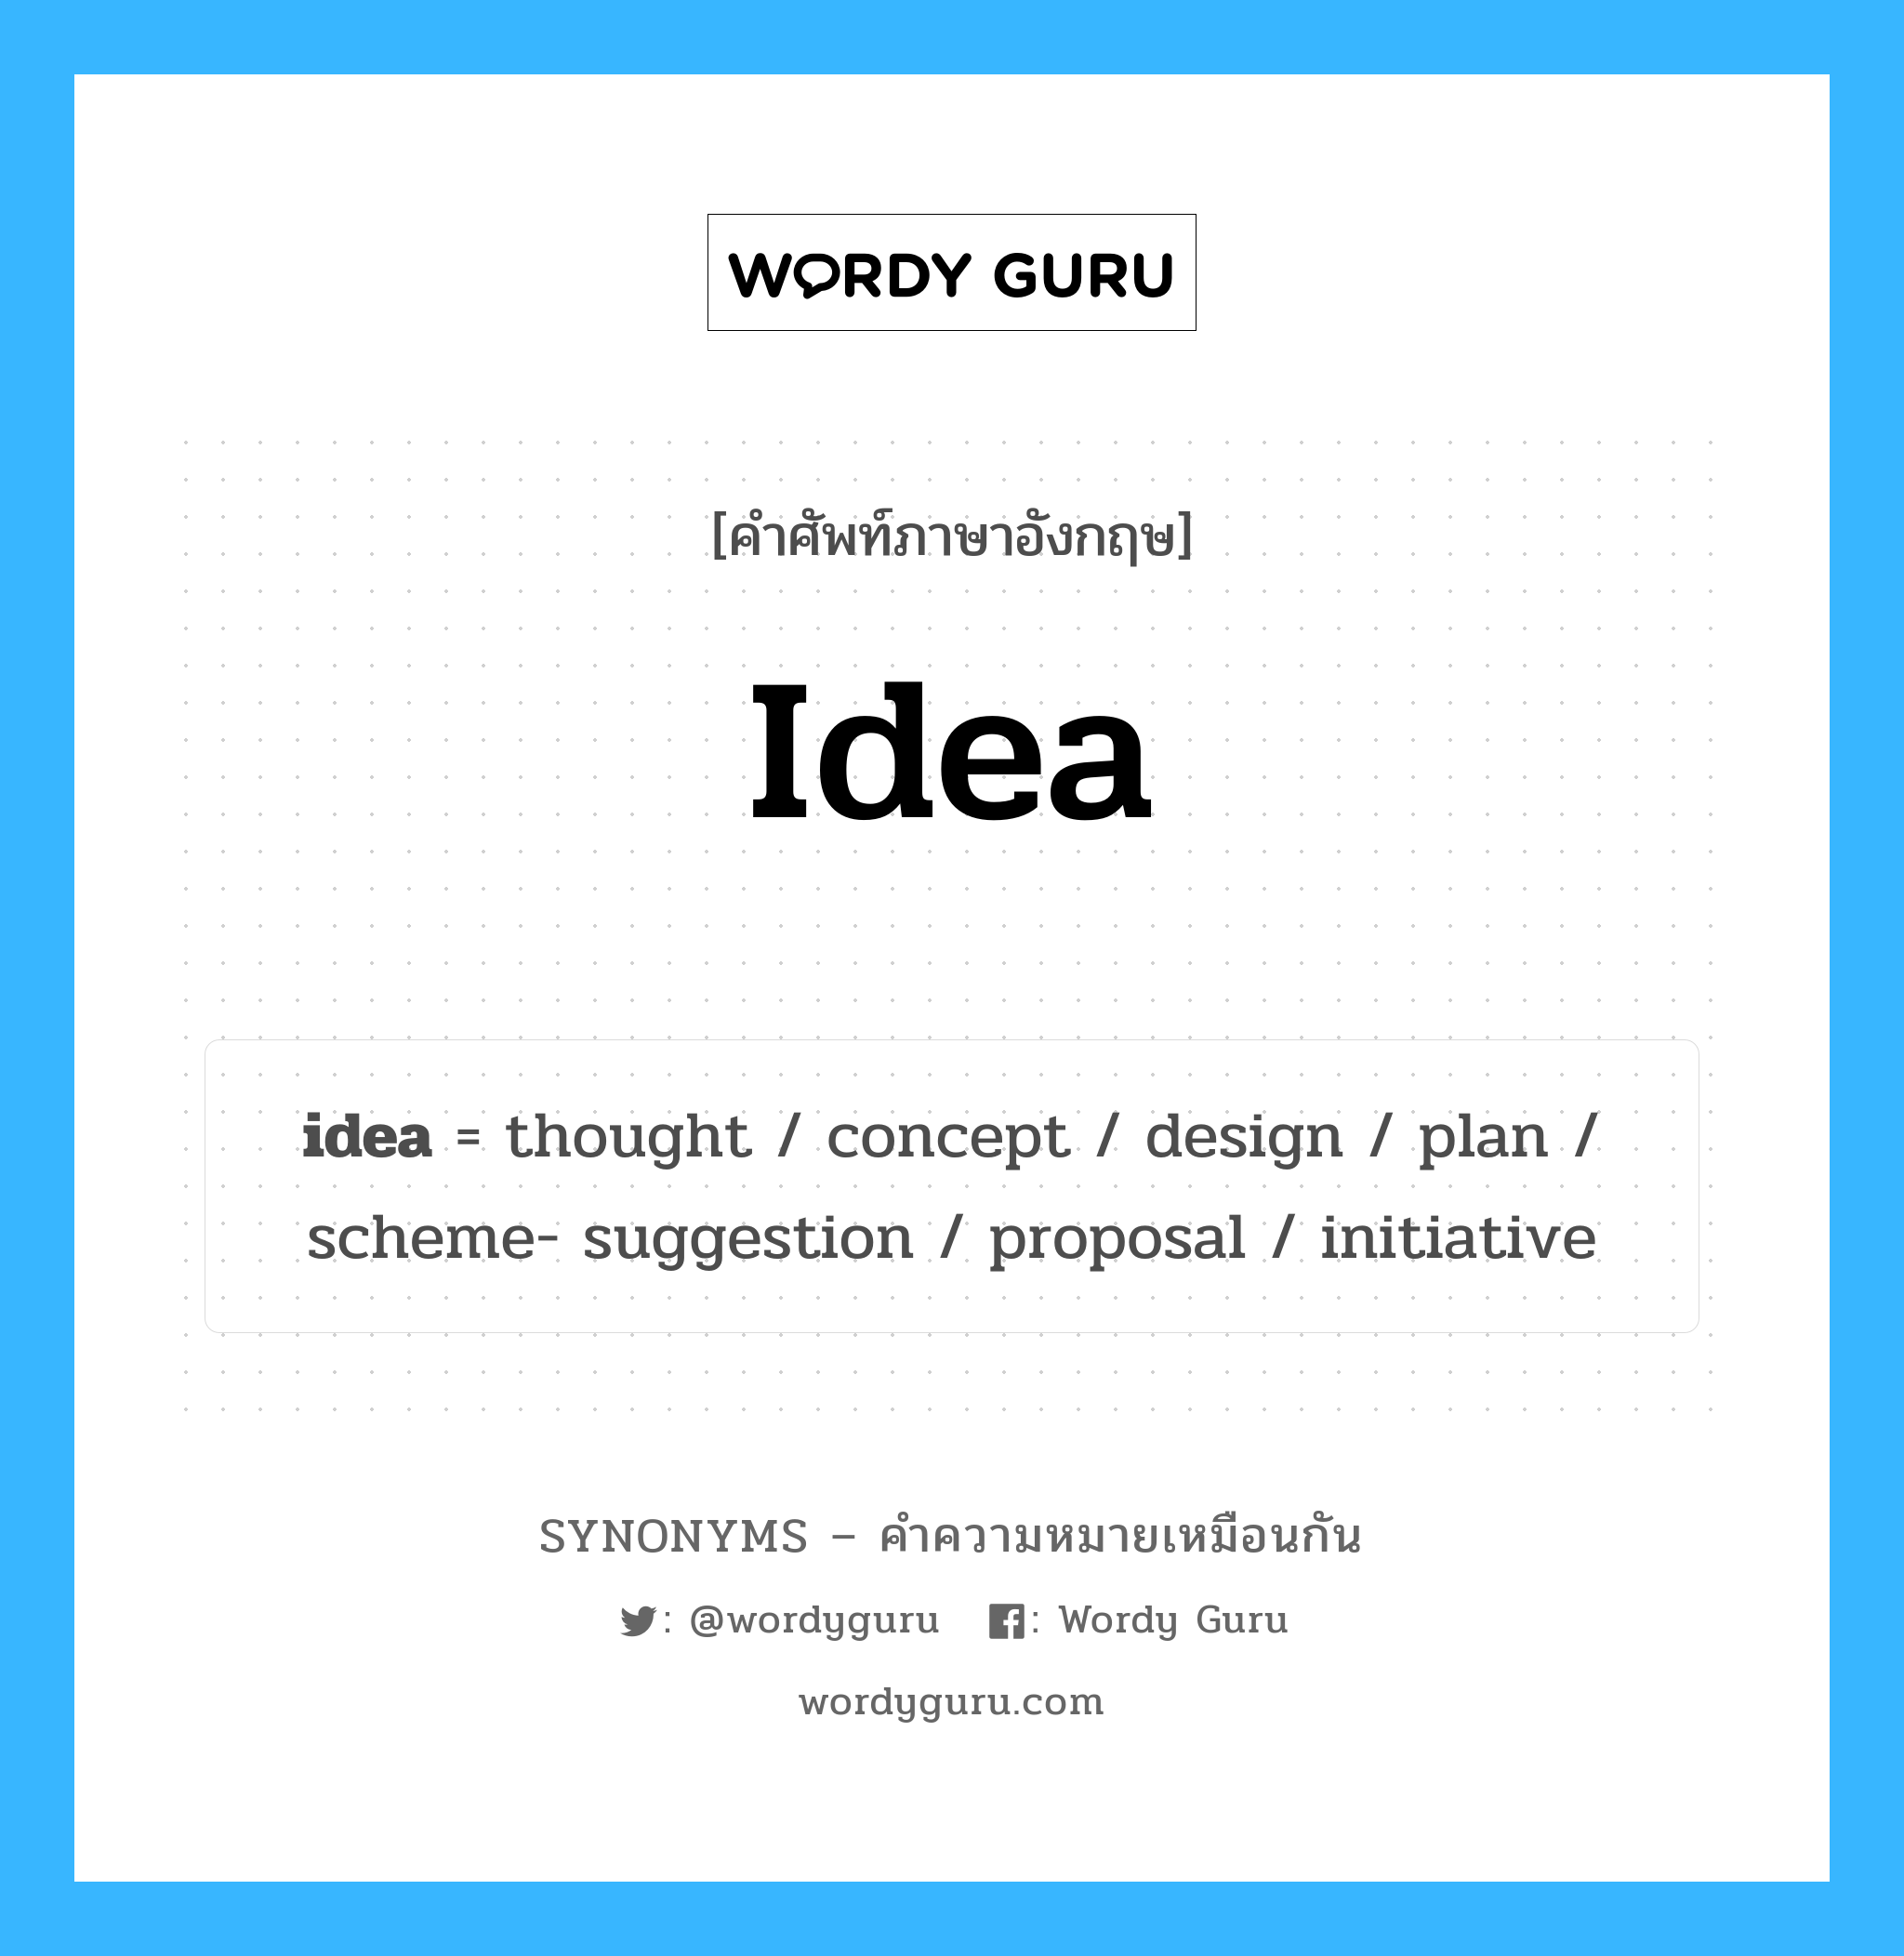 initiative เป็นหนึ่งใน idea และมีคำอื่น ๆ อีกดังนี้, คำศัพท์ภาษาอังกฤษ initiative ความหมายคล้ายกันกับ idea แปลว่า ความคิดริเริ่ม หมวด idea